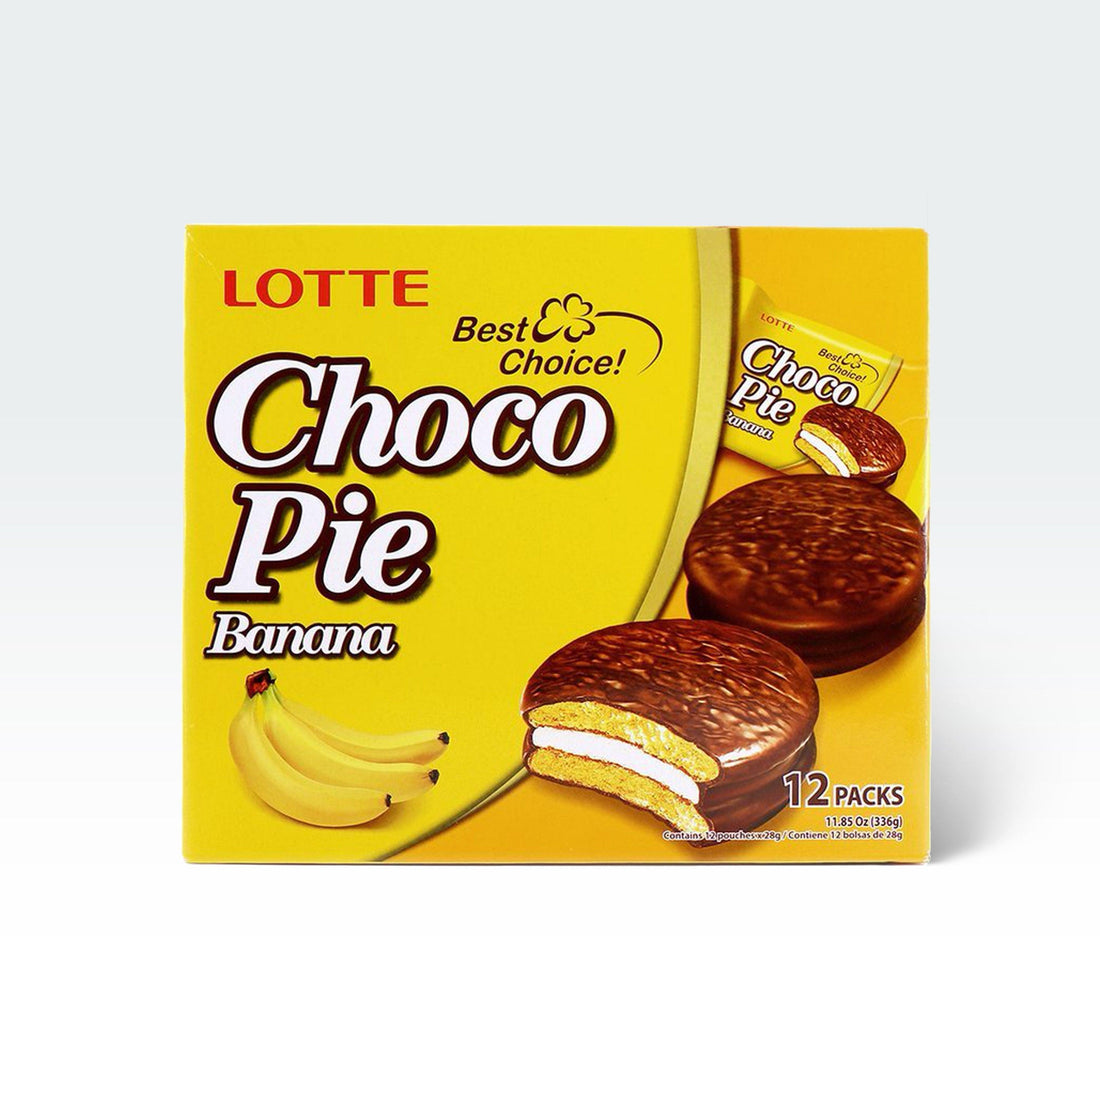 Lotte Choco Pie Banana 0.98oz(28g) x 12 Pcs - Anytime Basket